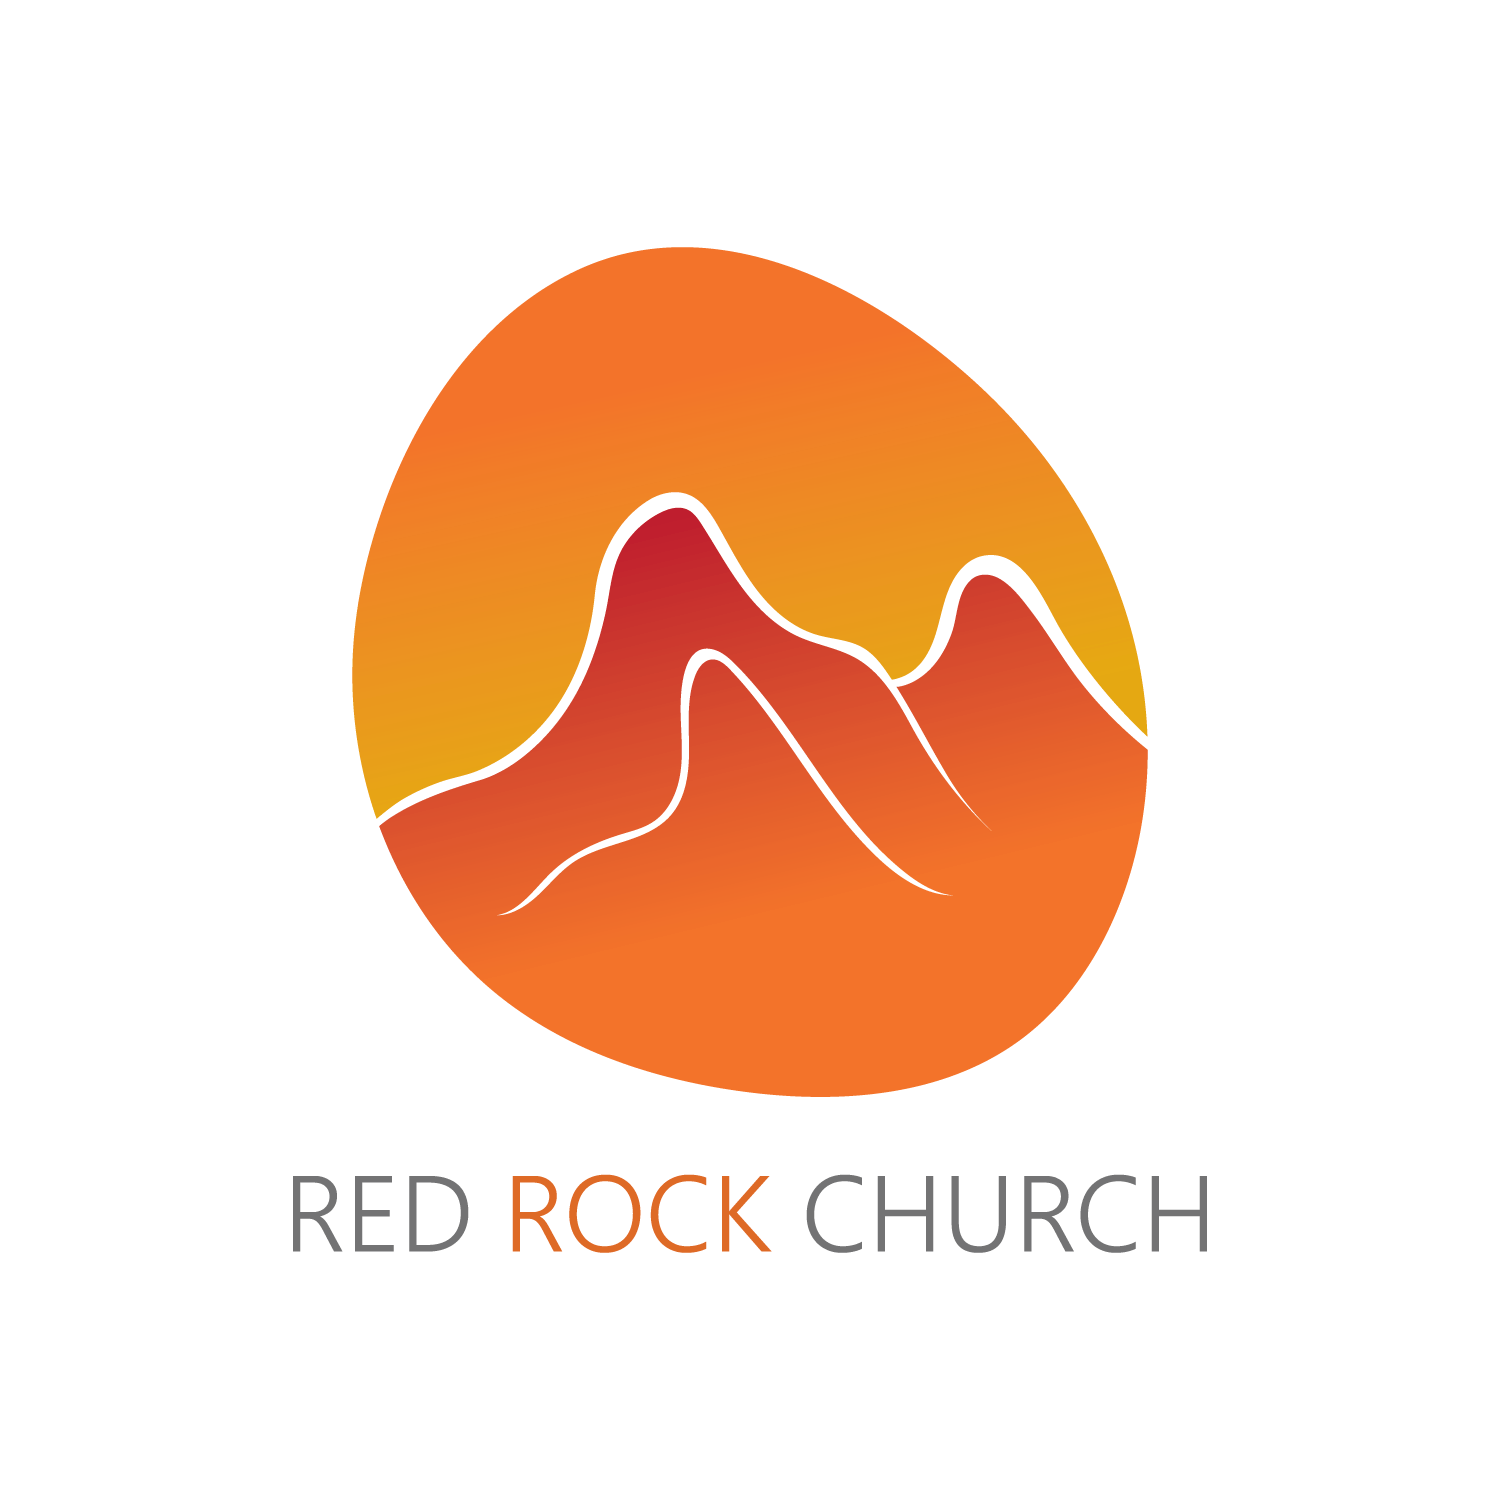 Red and Grey Church Logo - Modern, Bold, Church Logo Design for Red Rock Church by Zsófi ...